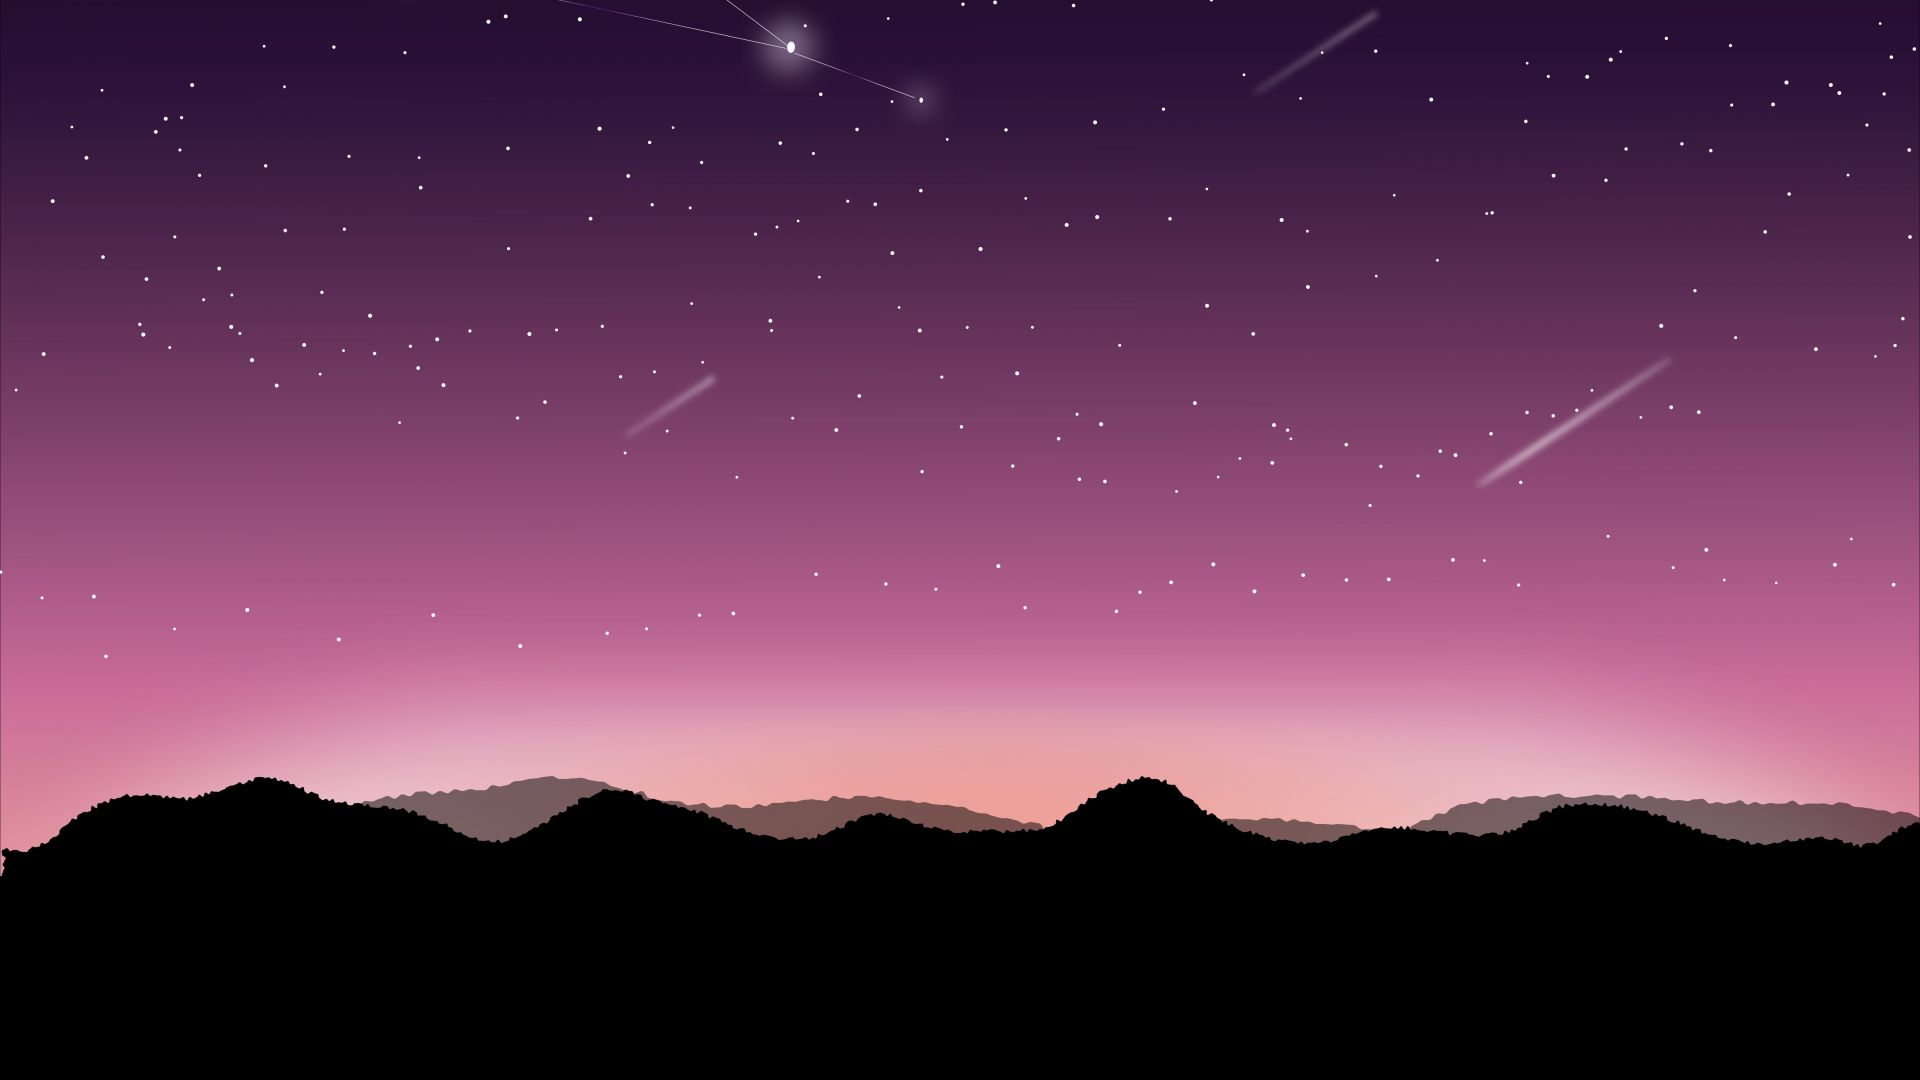 Star fall, night, sky, digital art wallpaper, HD image, picture, background, b029ff